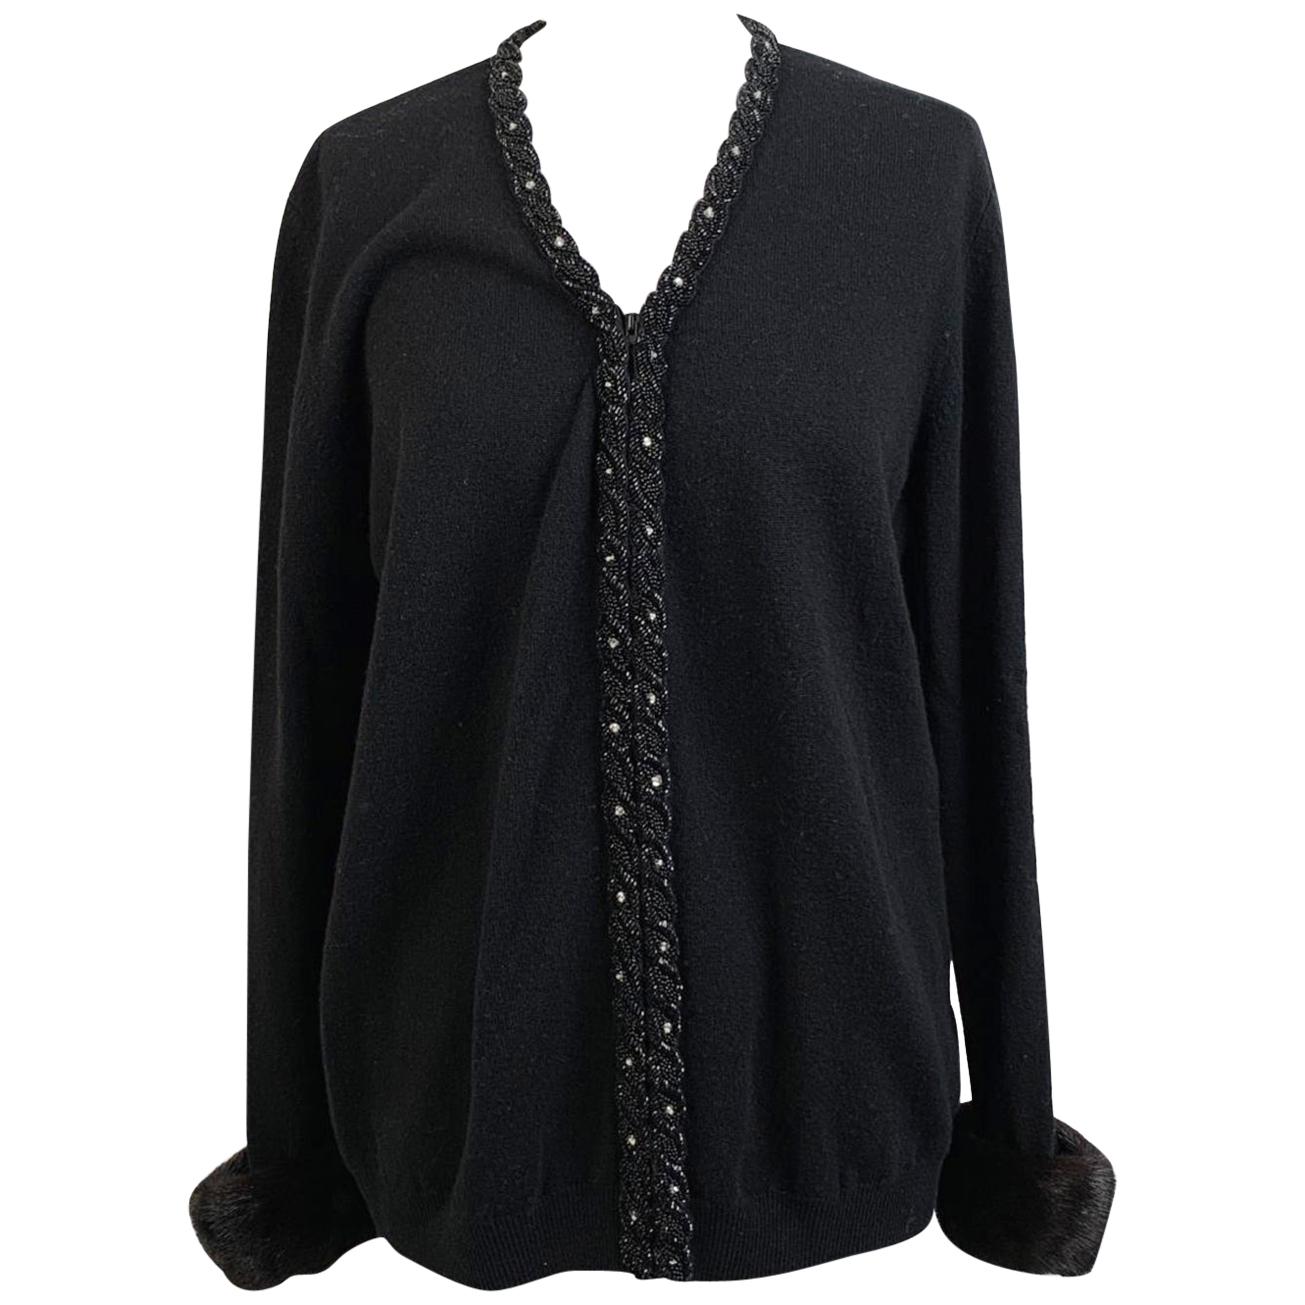 Anna Molinari Blumarine Embellished Black Fur Trim Cardigan Size 46